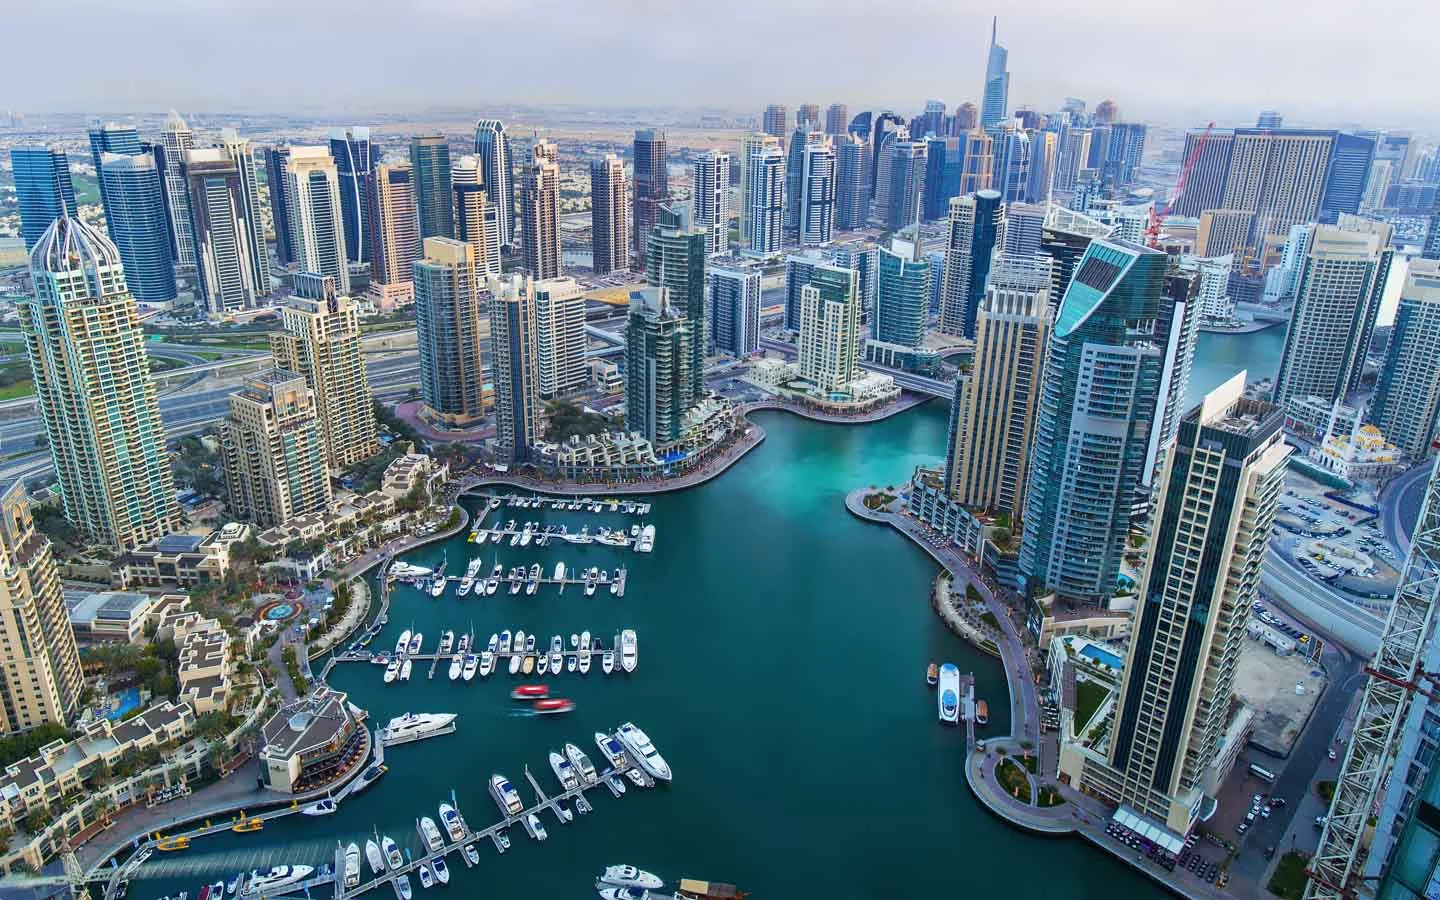 Luxury Property Dubai